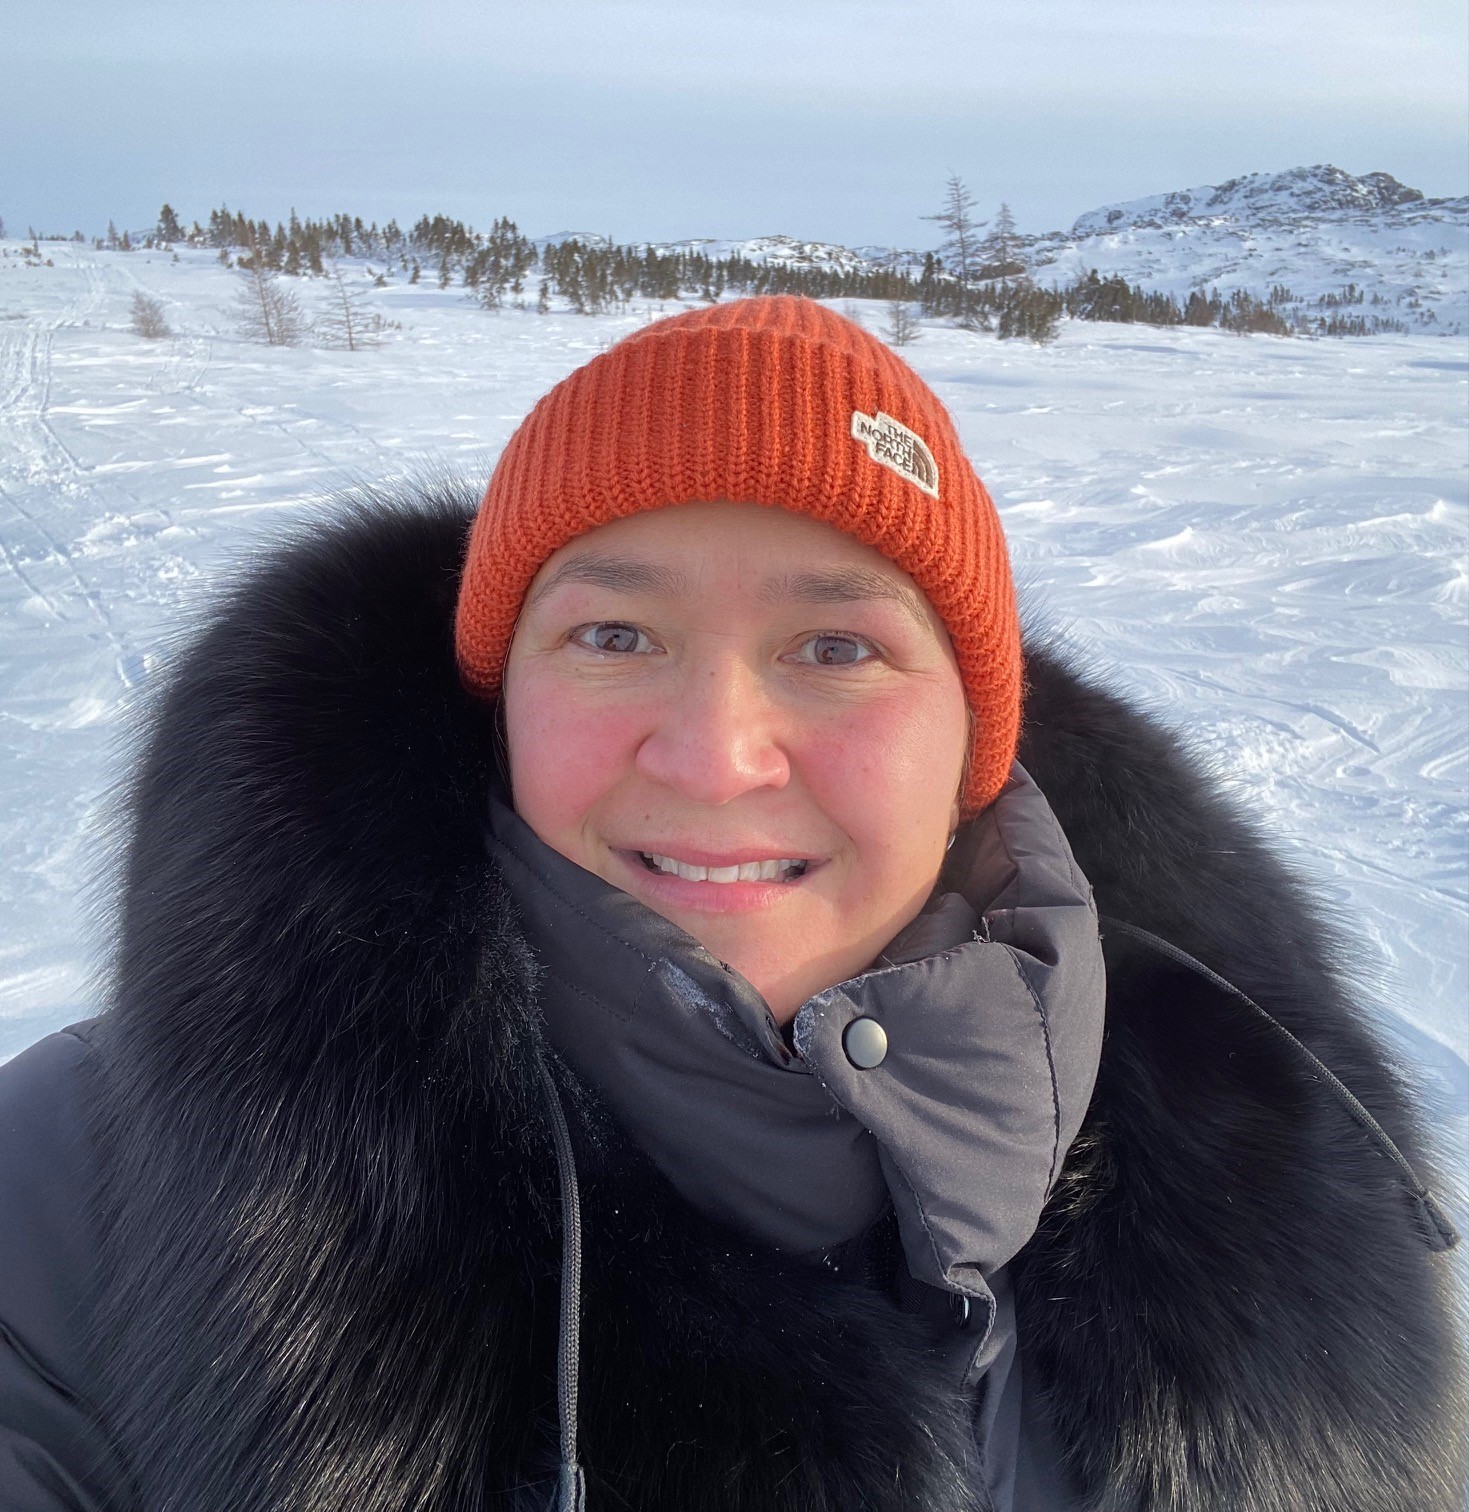 Beauty in Brain Differences - Pauktuutit Inuit Women of Canada